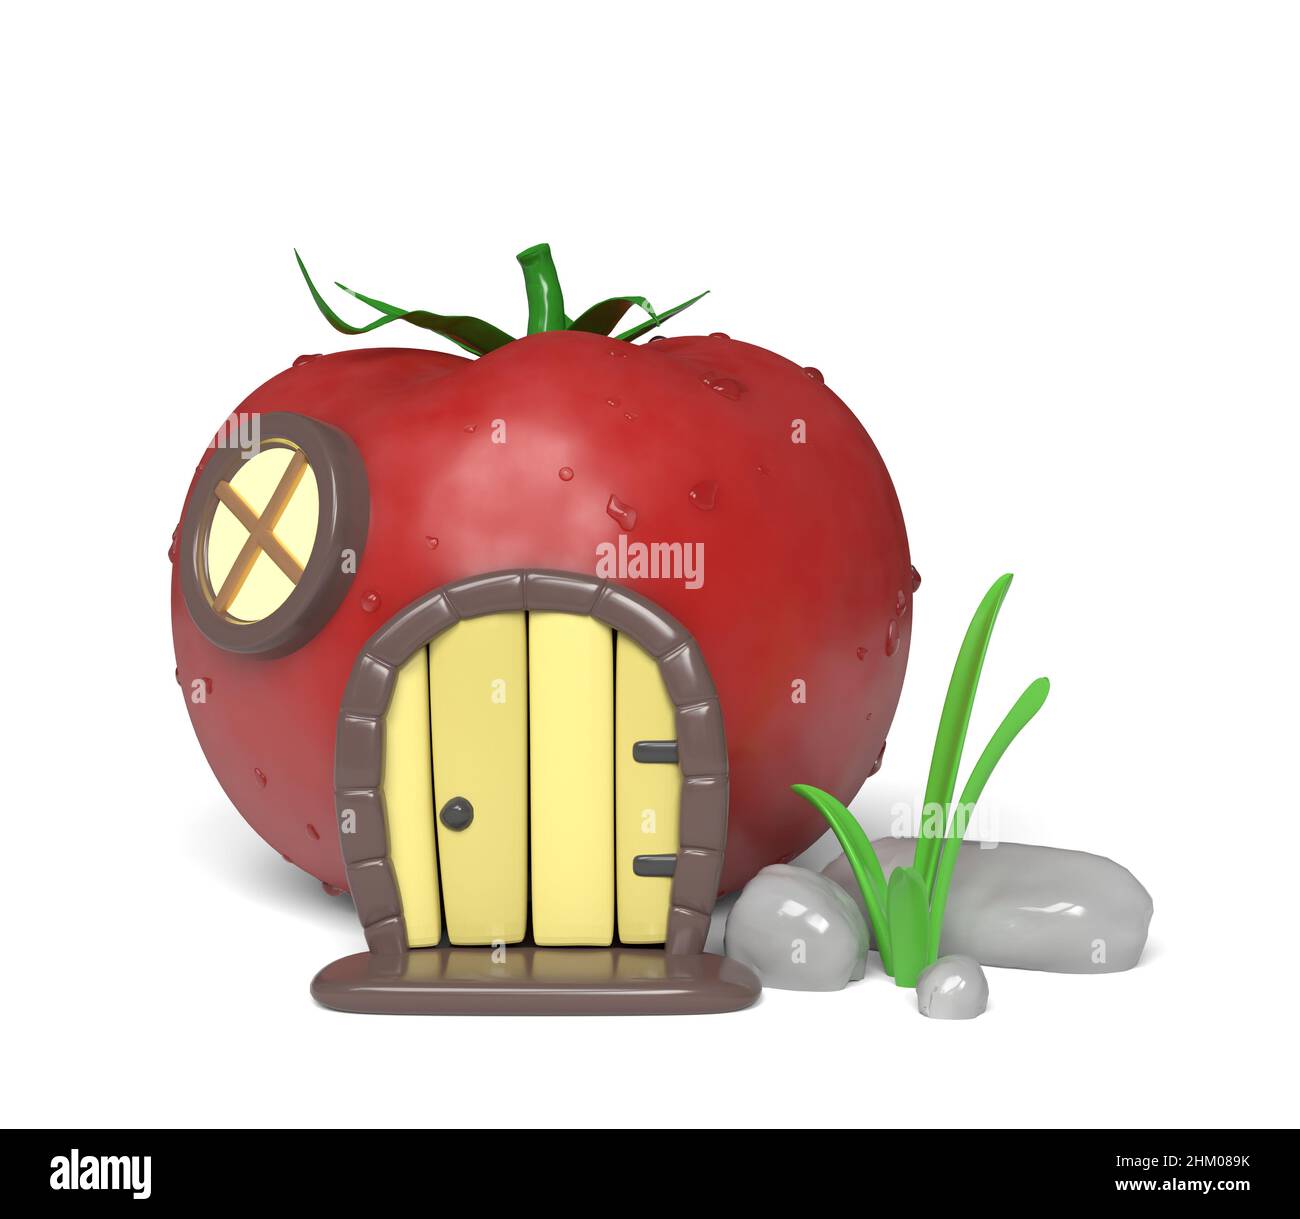 Cute cartoon tomato house. 3D illustration. Stock Photo